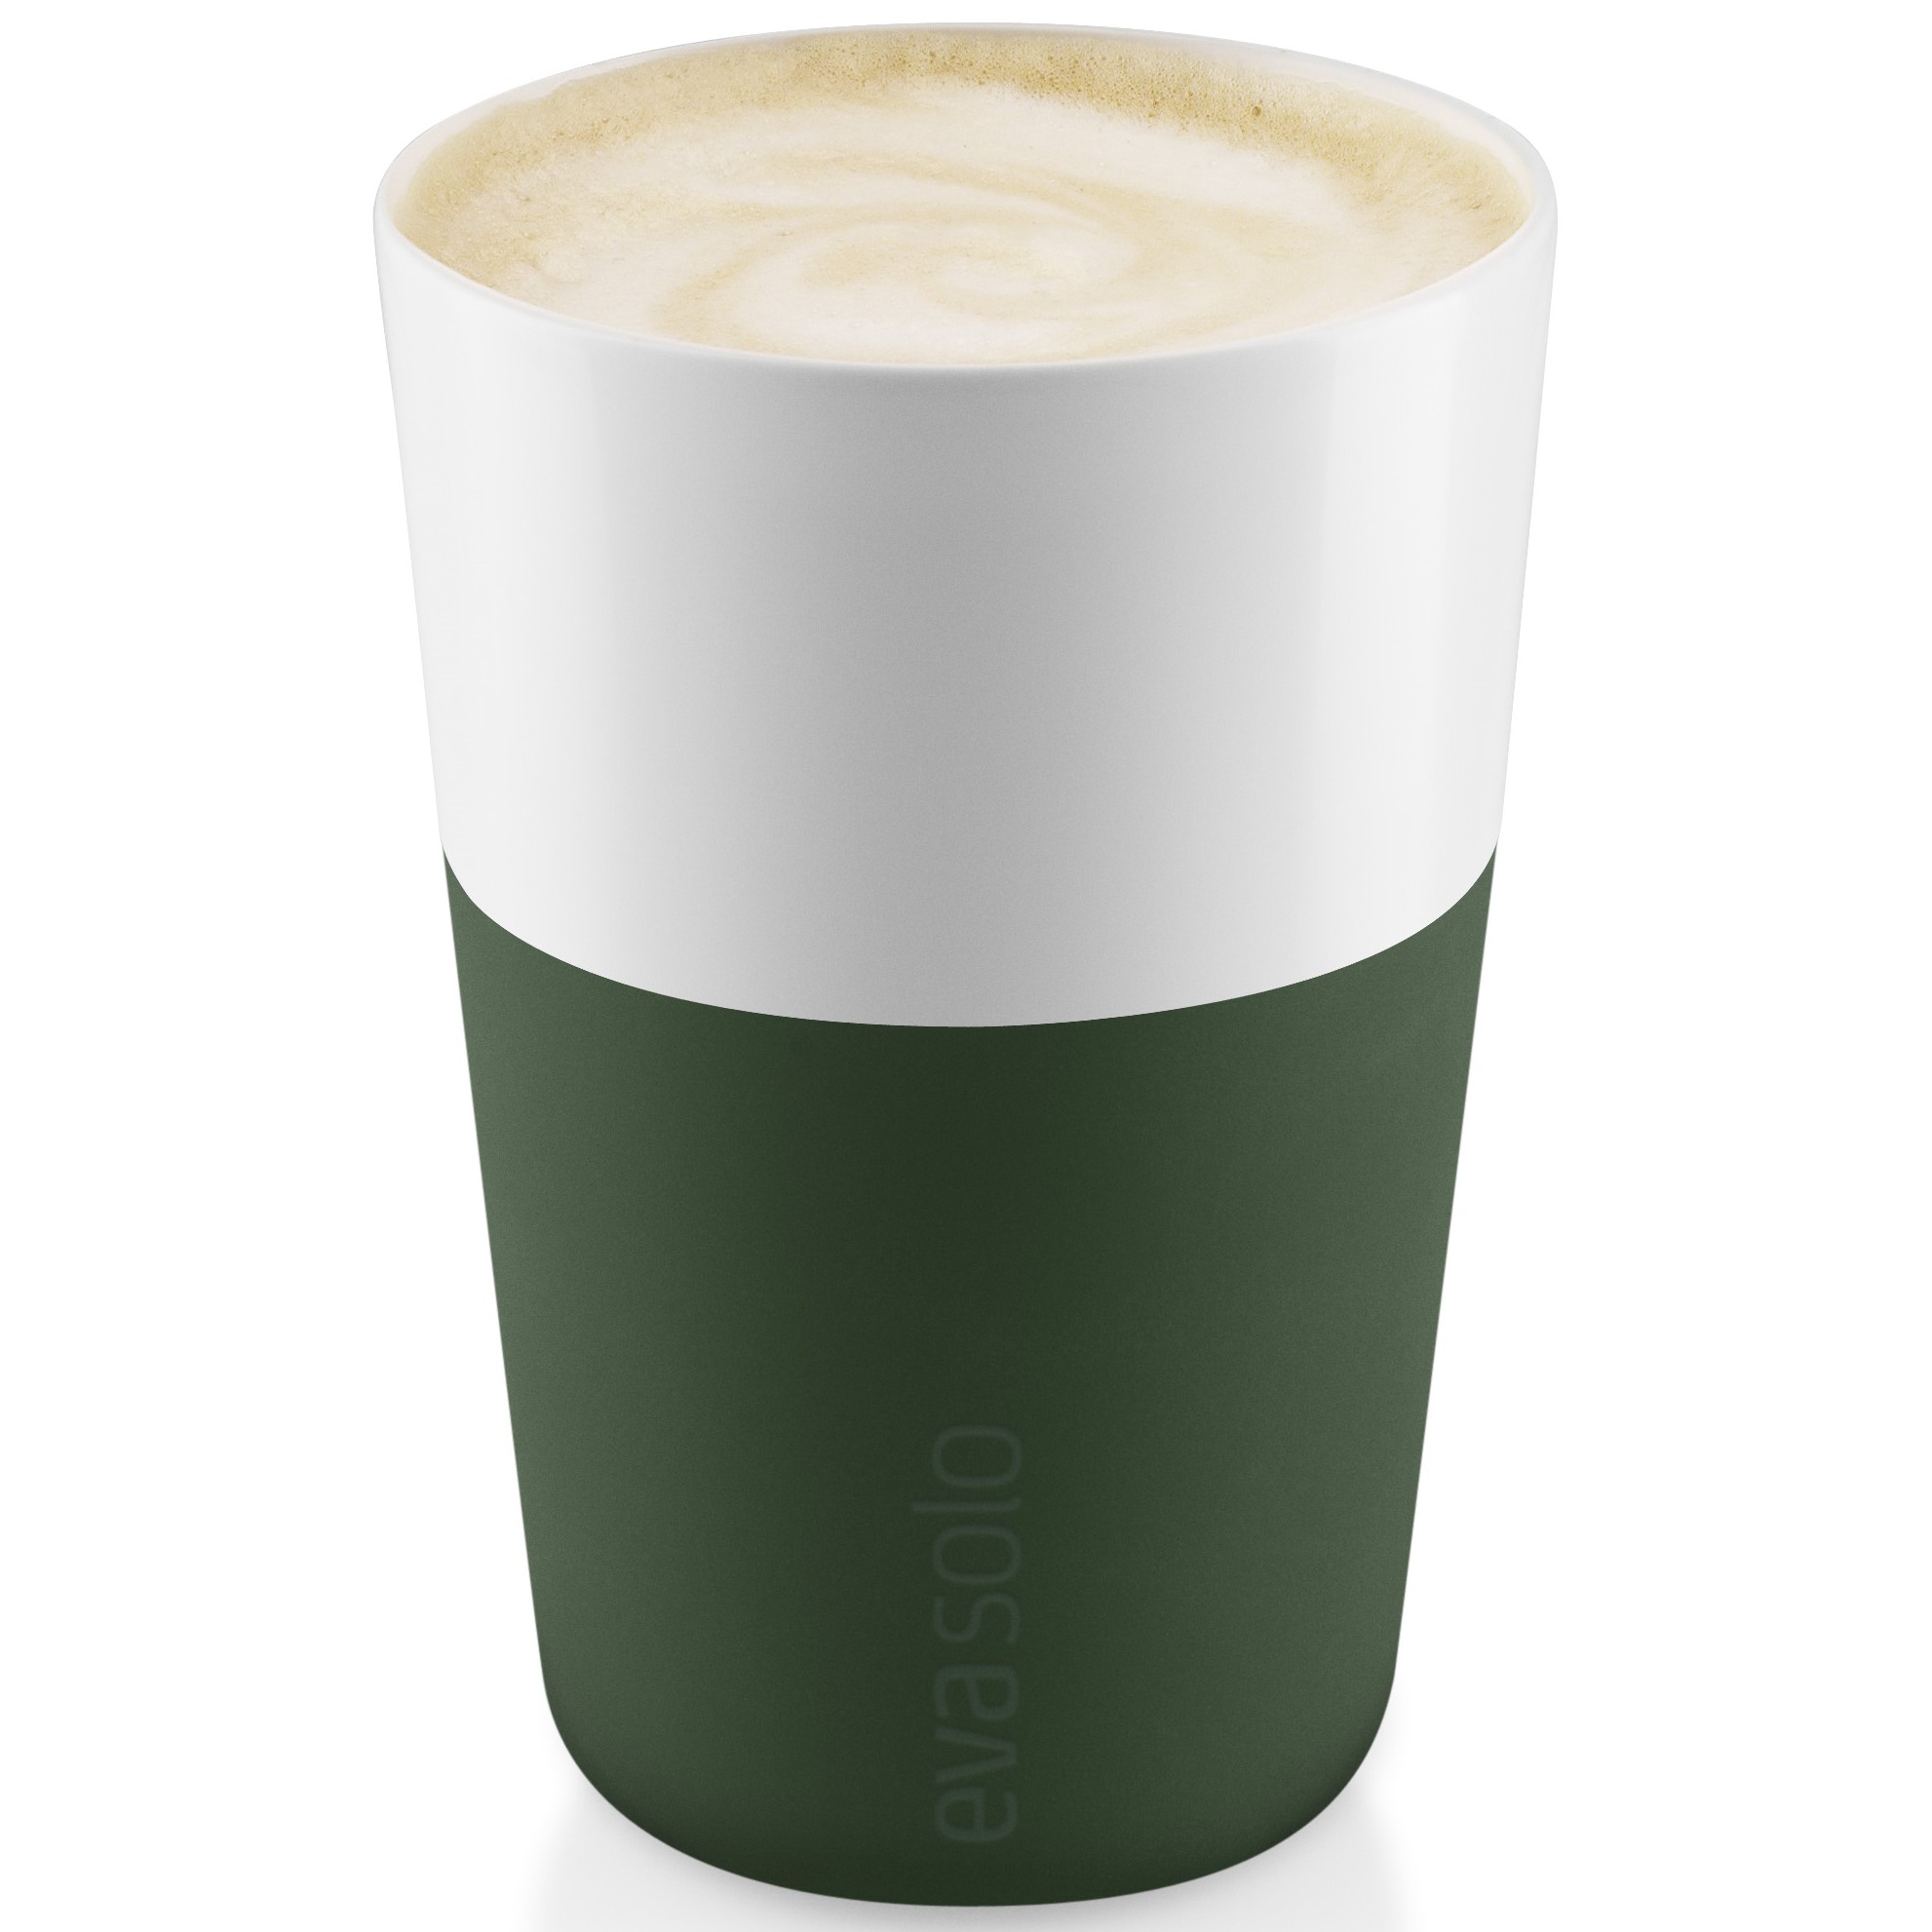 Hrnek na café latte, sada 2 ks, 360 ml, emeraldově zelená, Eva Solo